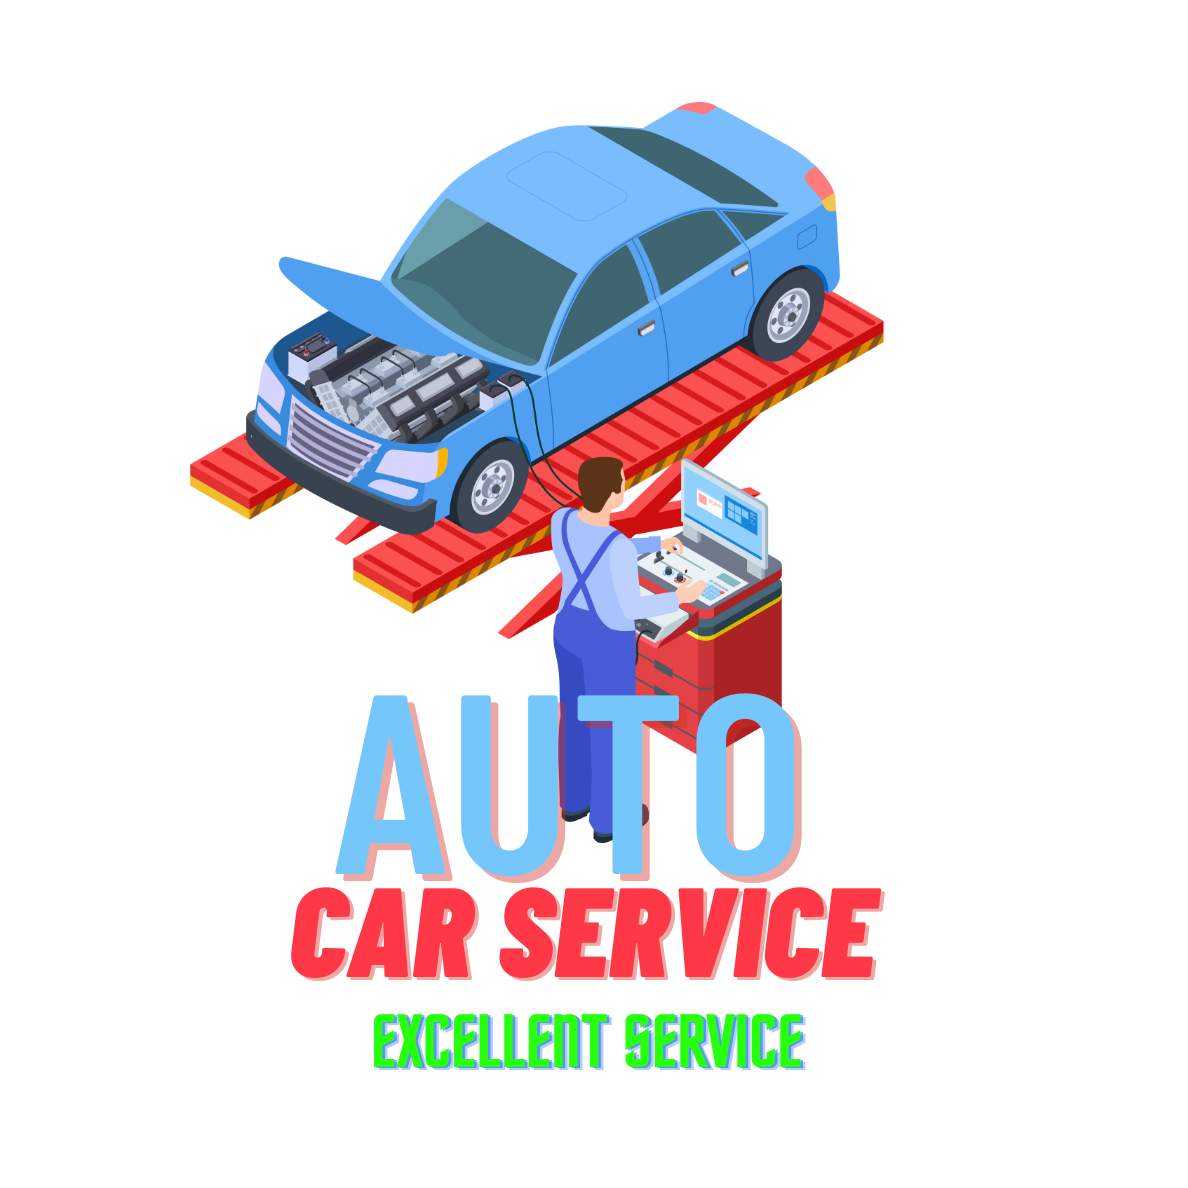 car service logo preview image.